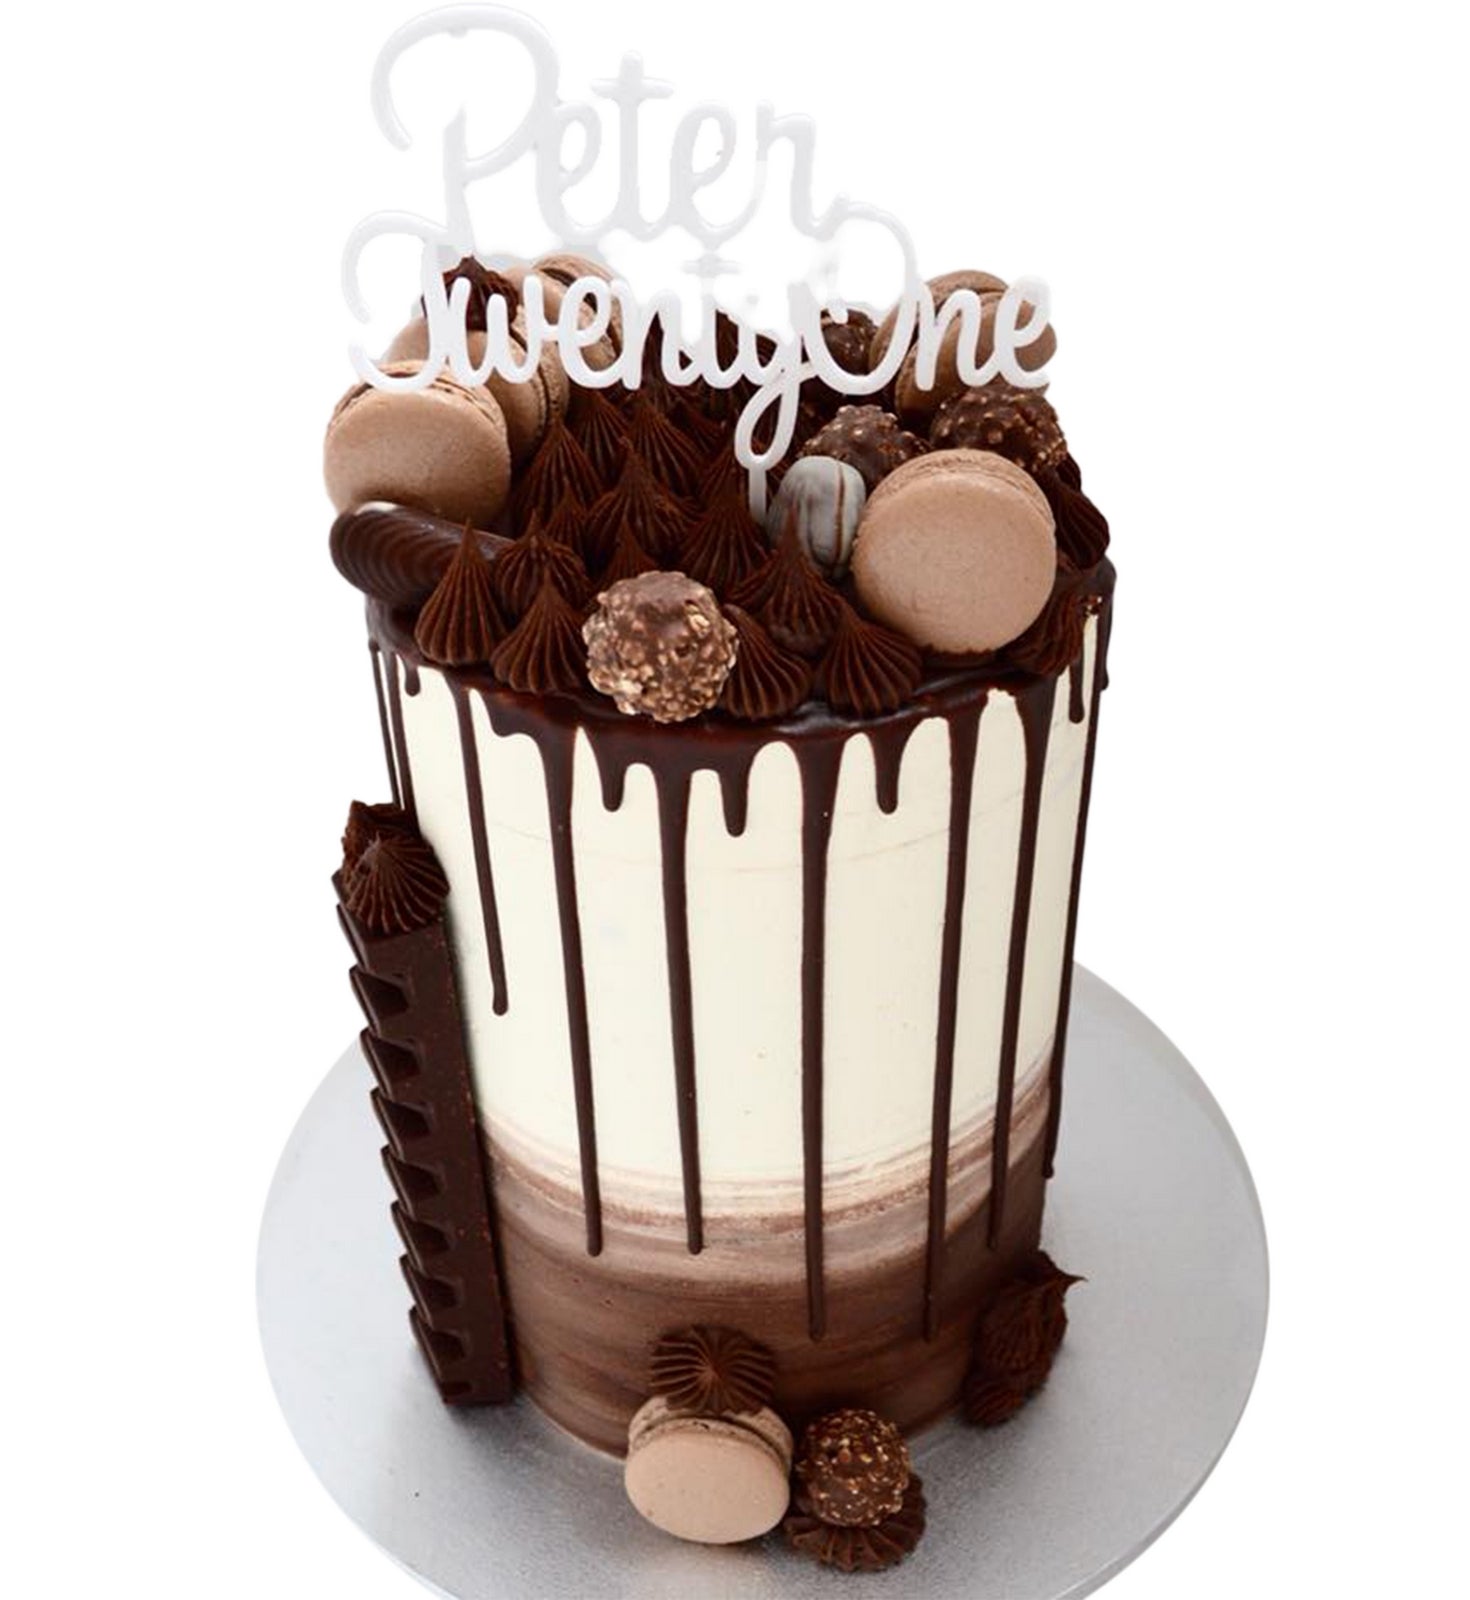 Birthday Cupcake Tower personally design for a birthday cake